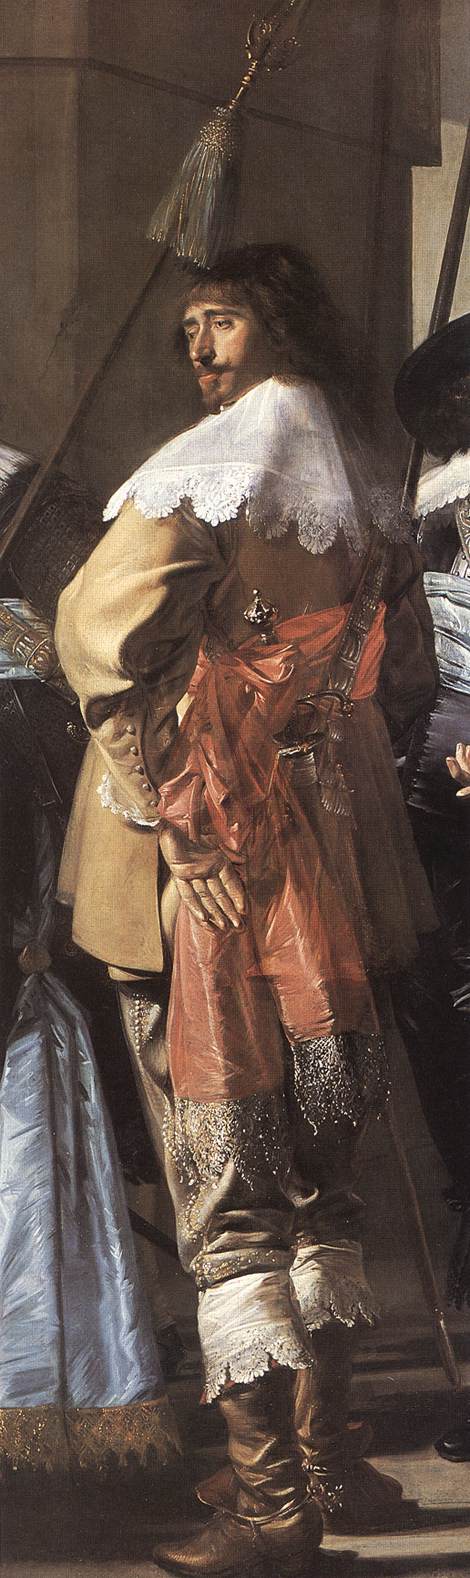 Dutch portraitist Frans Hals (141 works)